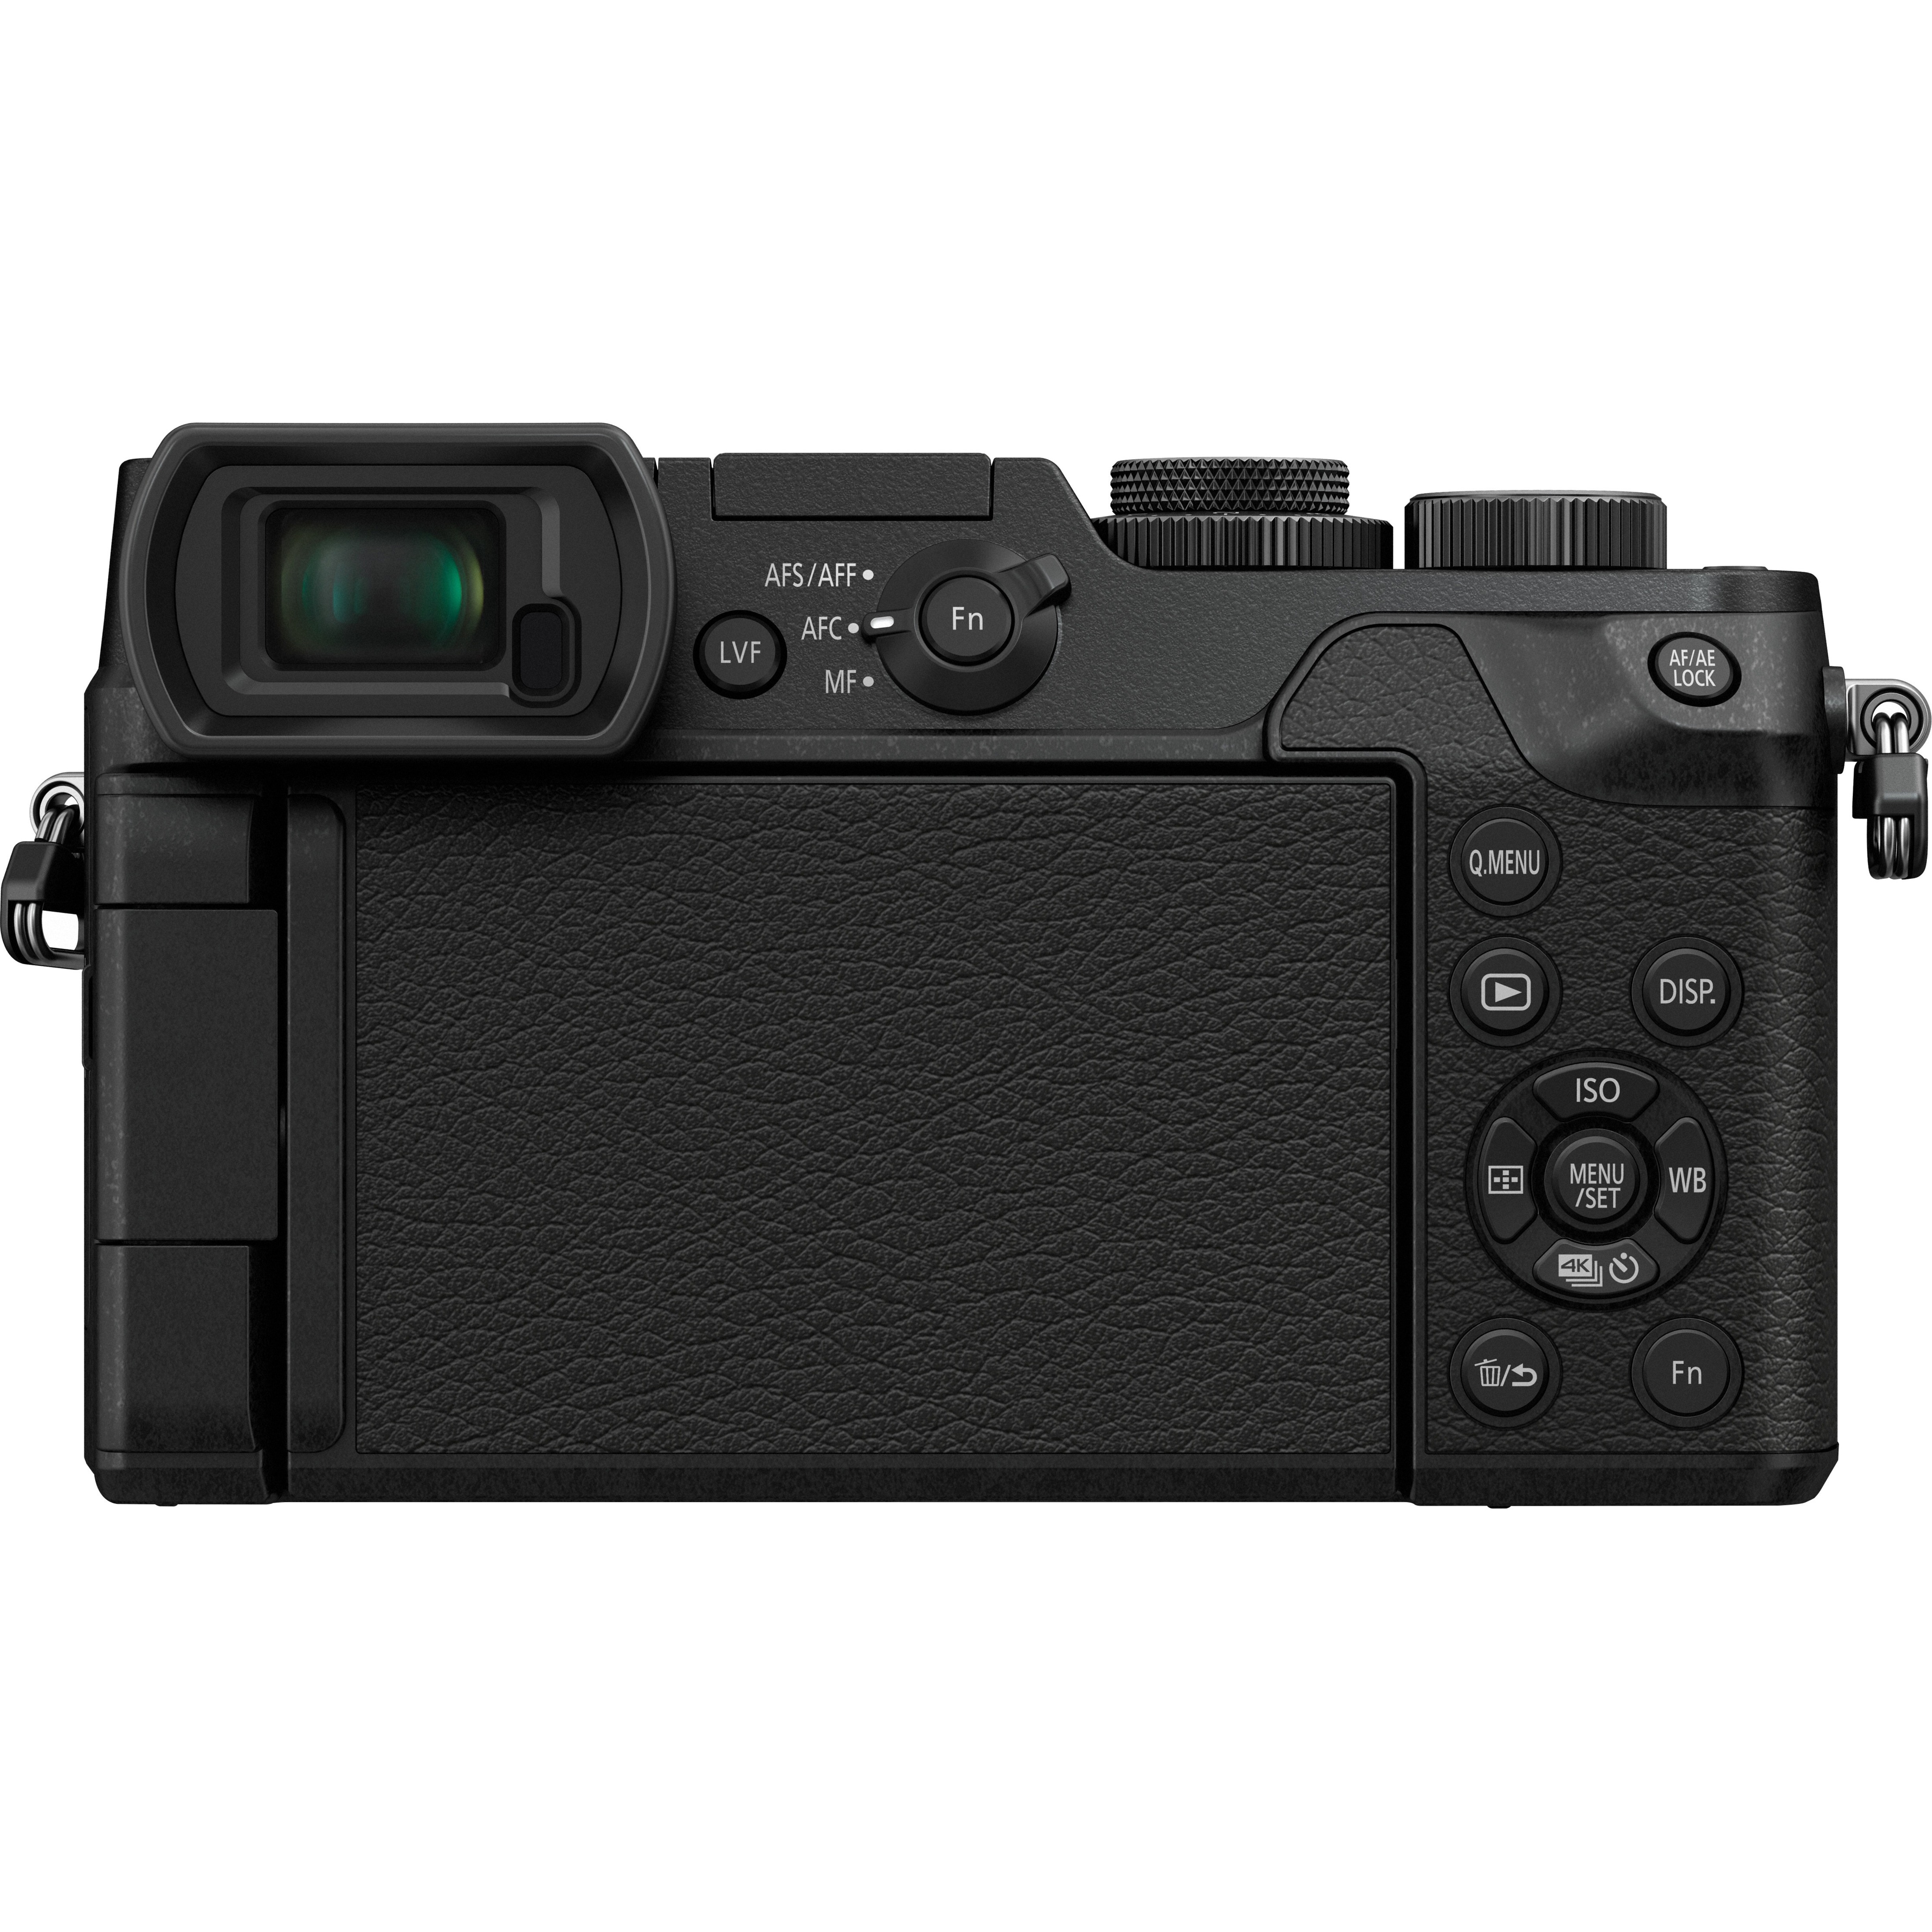 Panasonic Lumix GX8 20.3 Megapixel Mirrorless Camera Body Only, Black - image 2 of 4